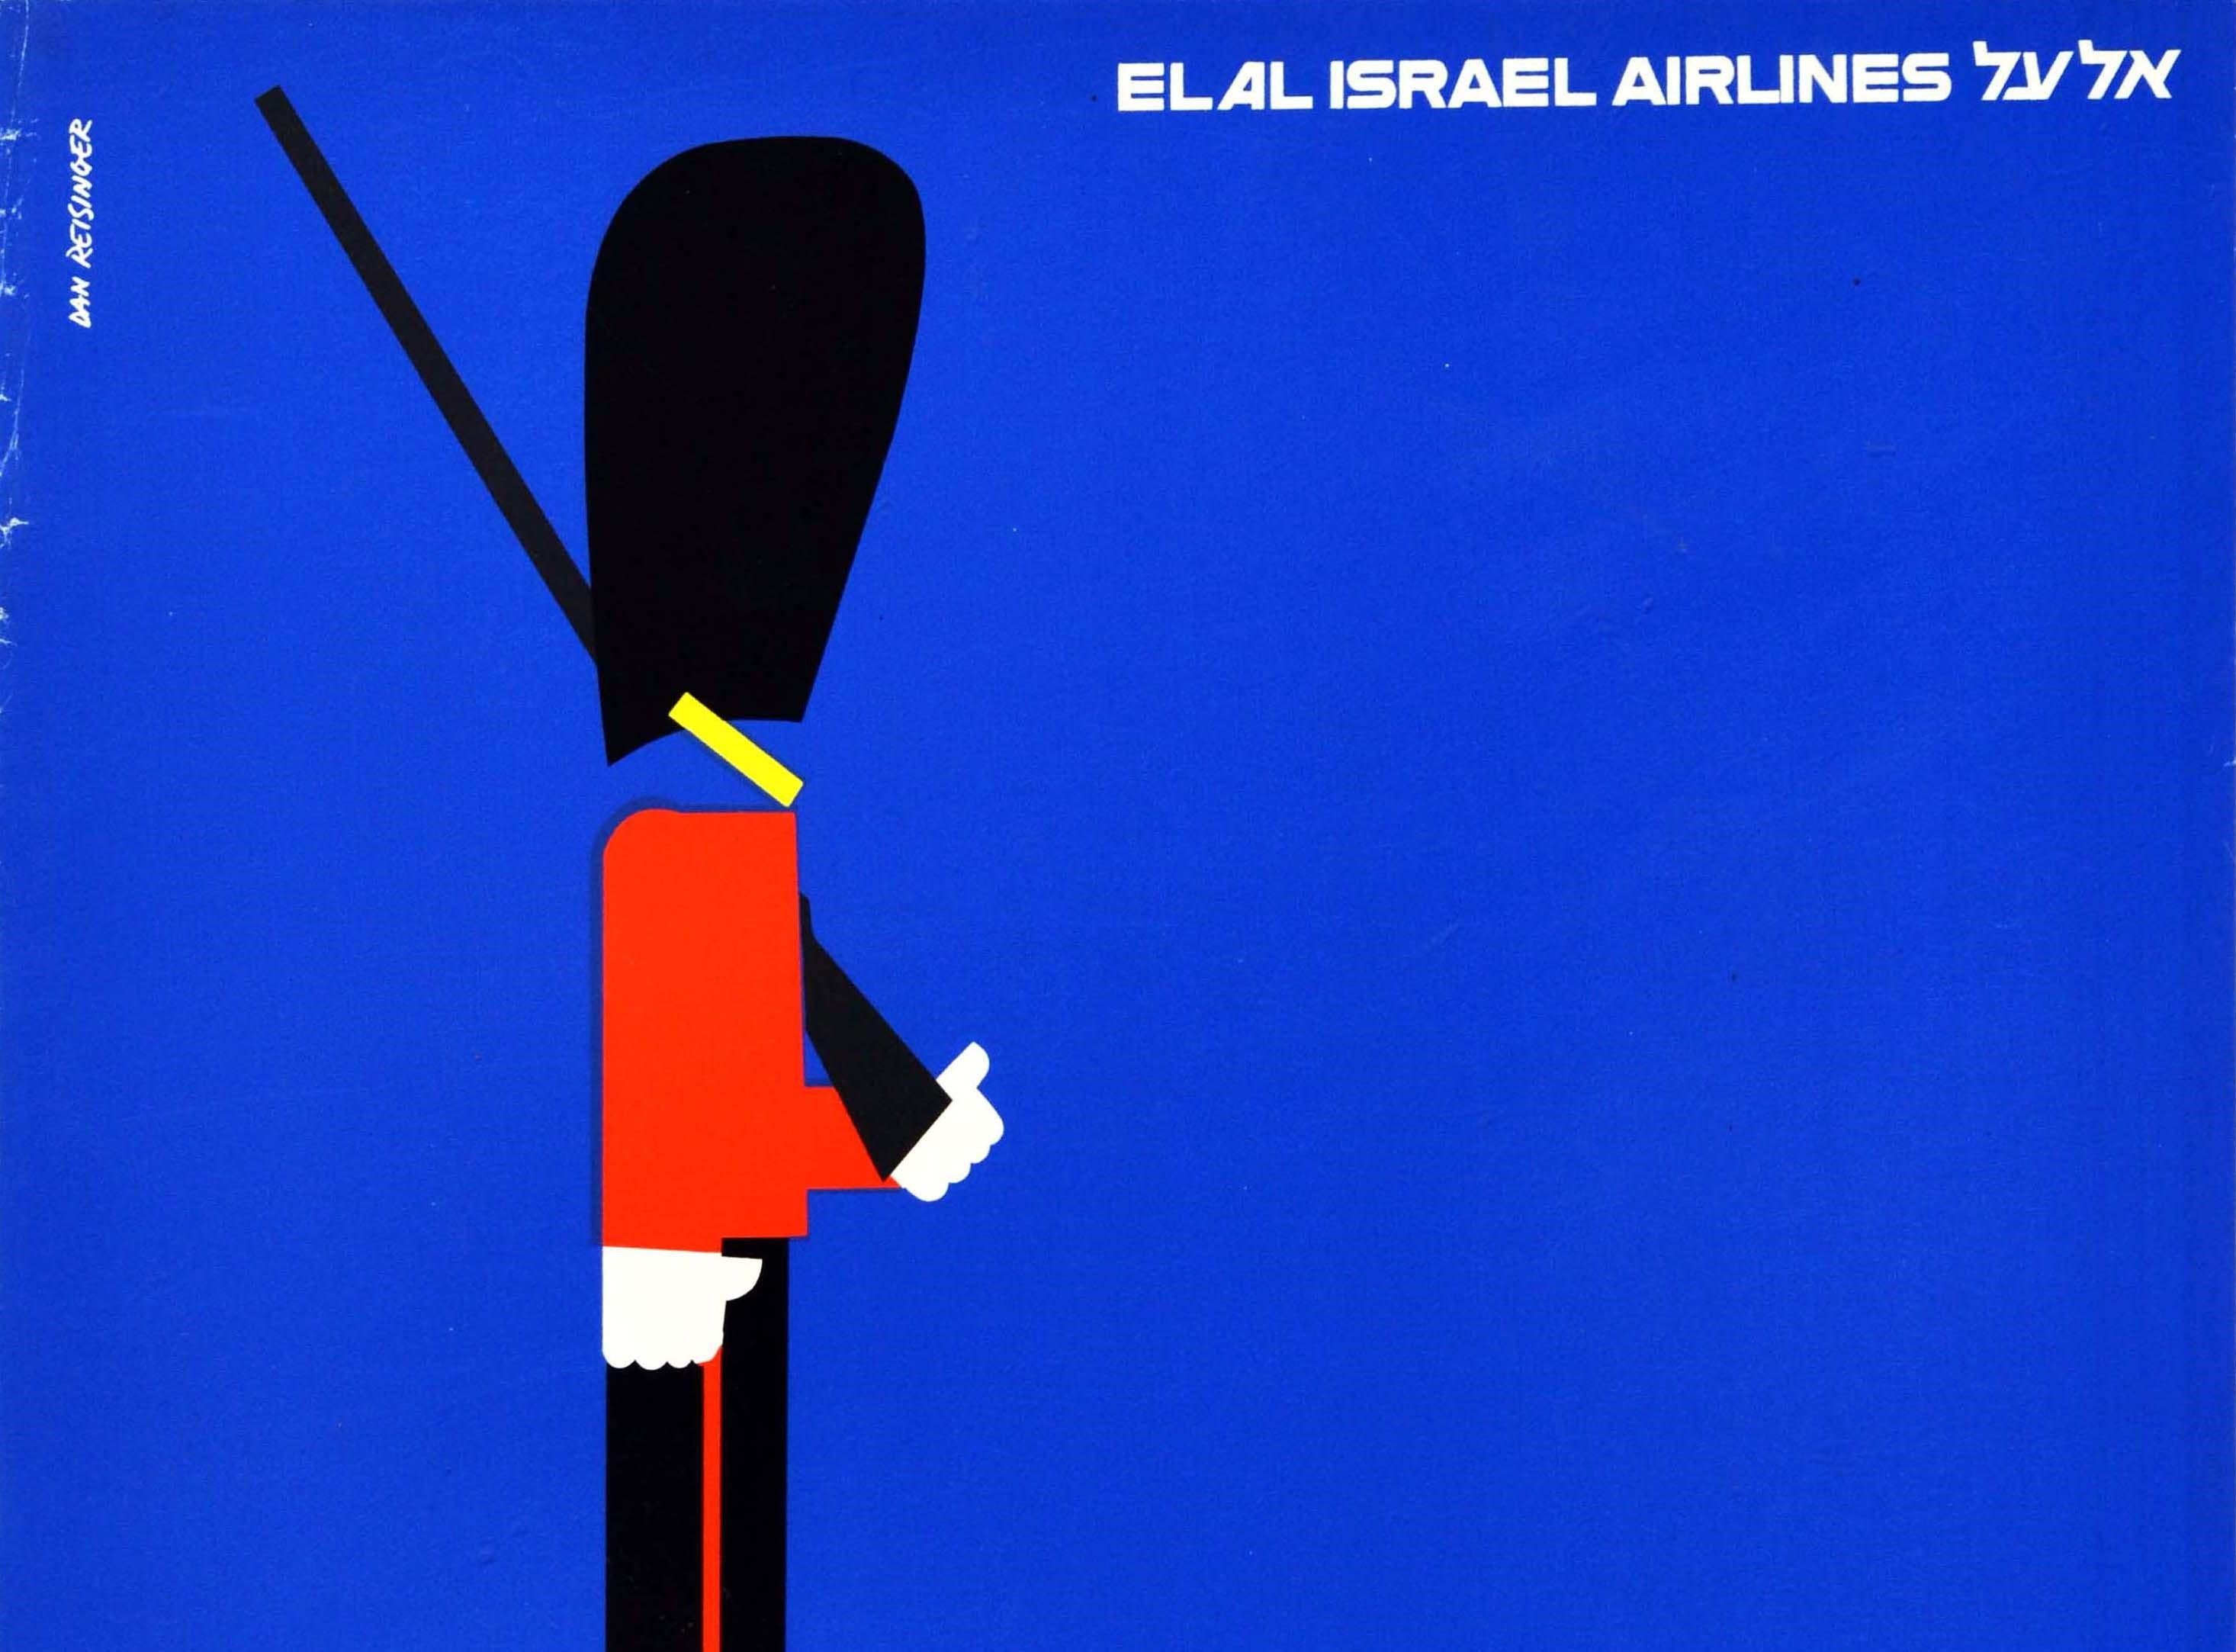 Original Vintage Travel Poster El Al Israel Airlines London England Royal Guard - Print by Dan Reisinger